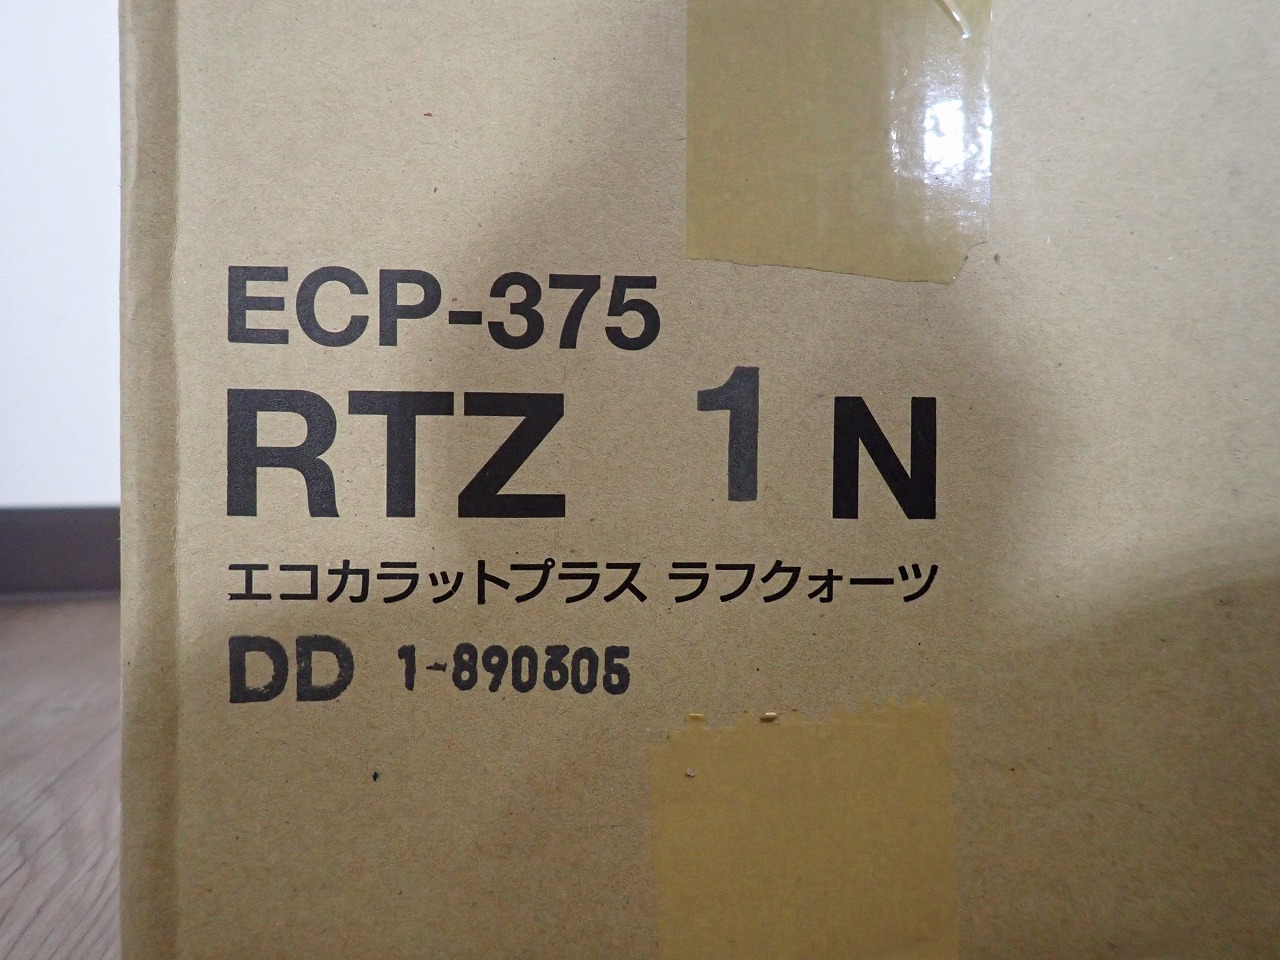 ECP-375 RTZ1N